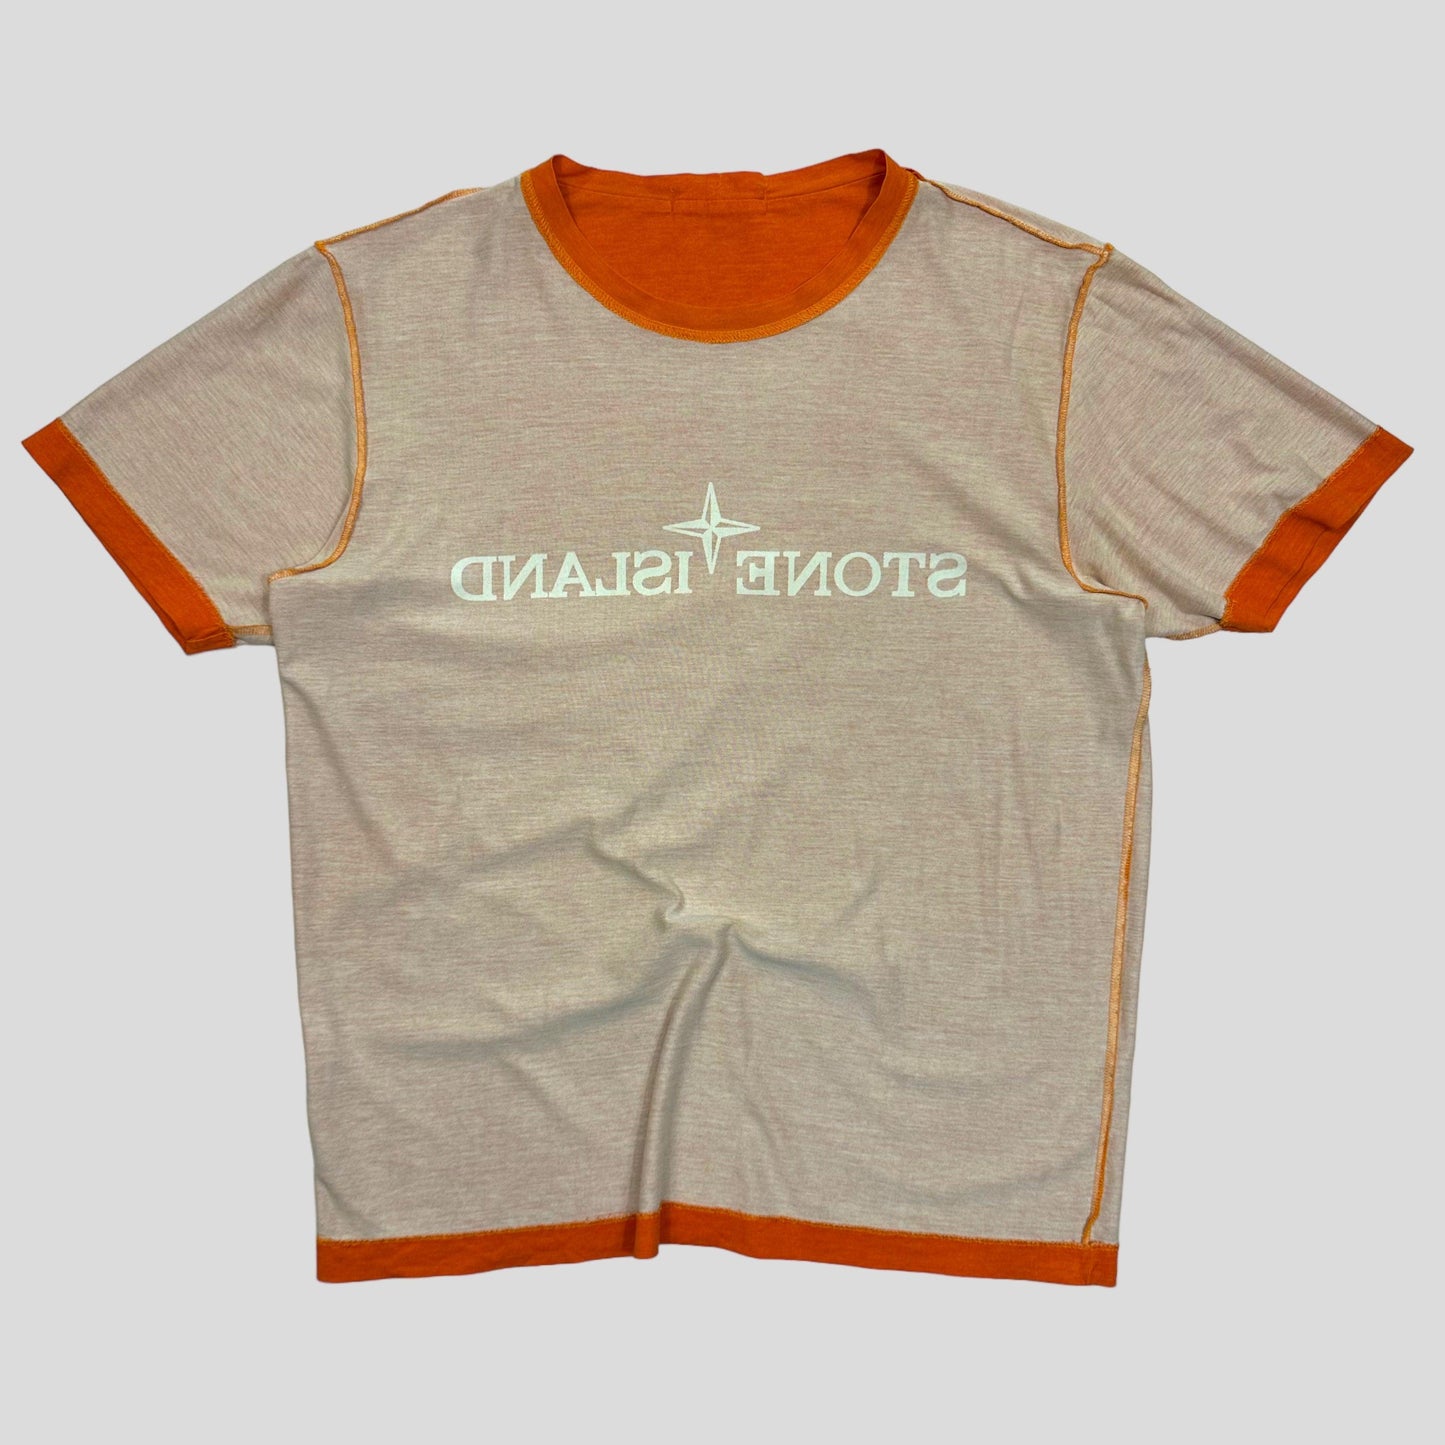 Stone Island SS07 Heather Orange Boxy T-shirt - M - Known Source